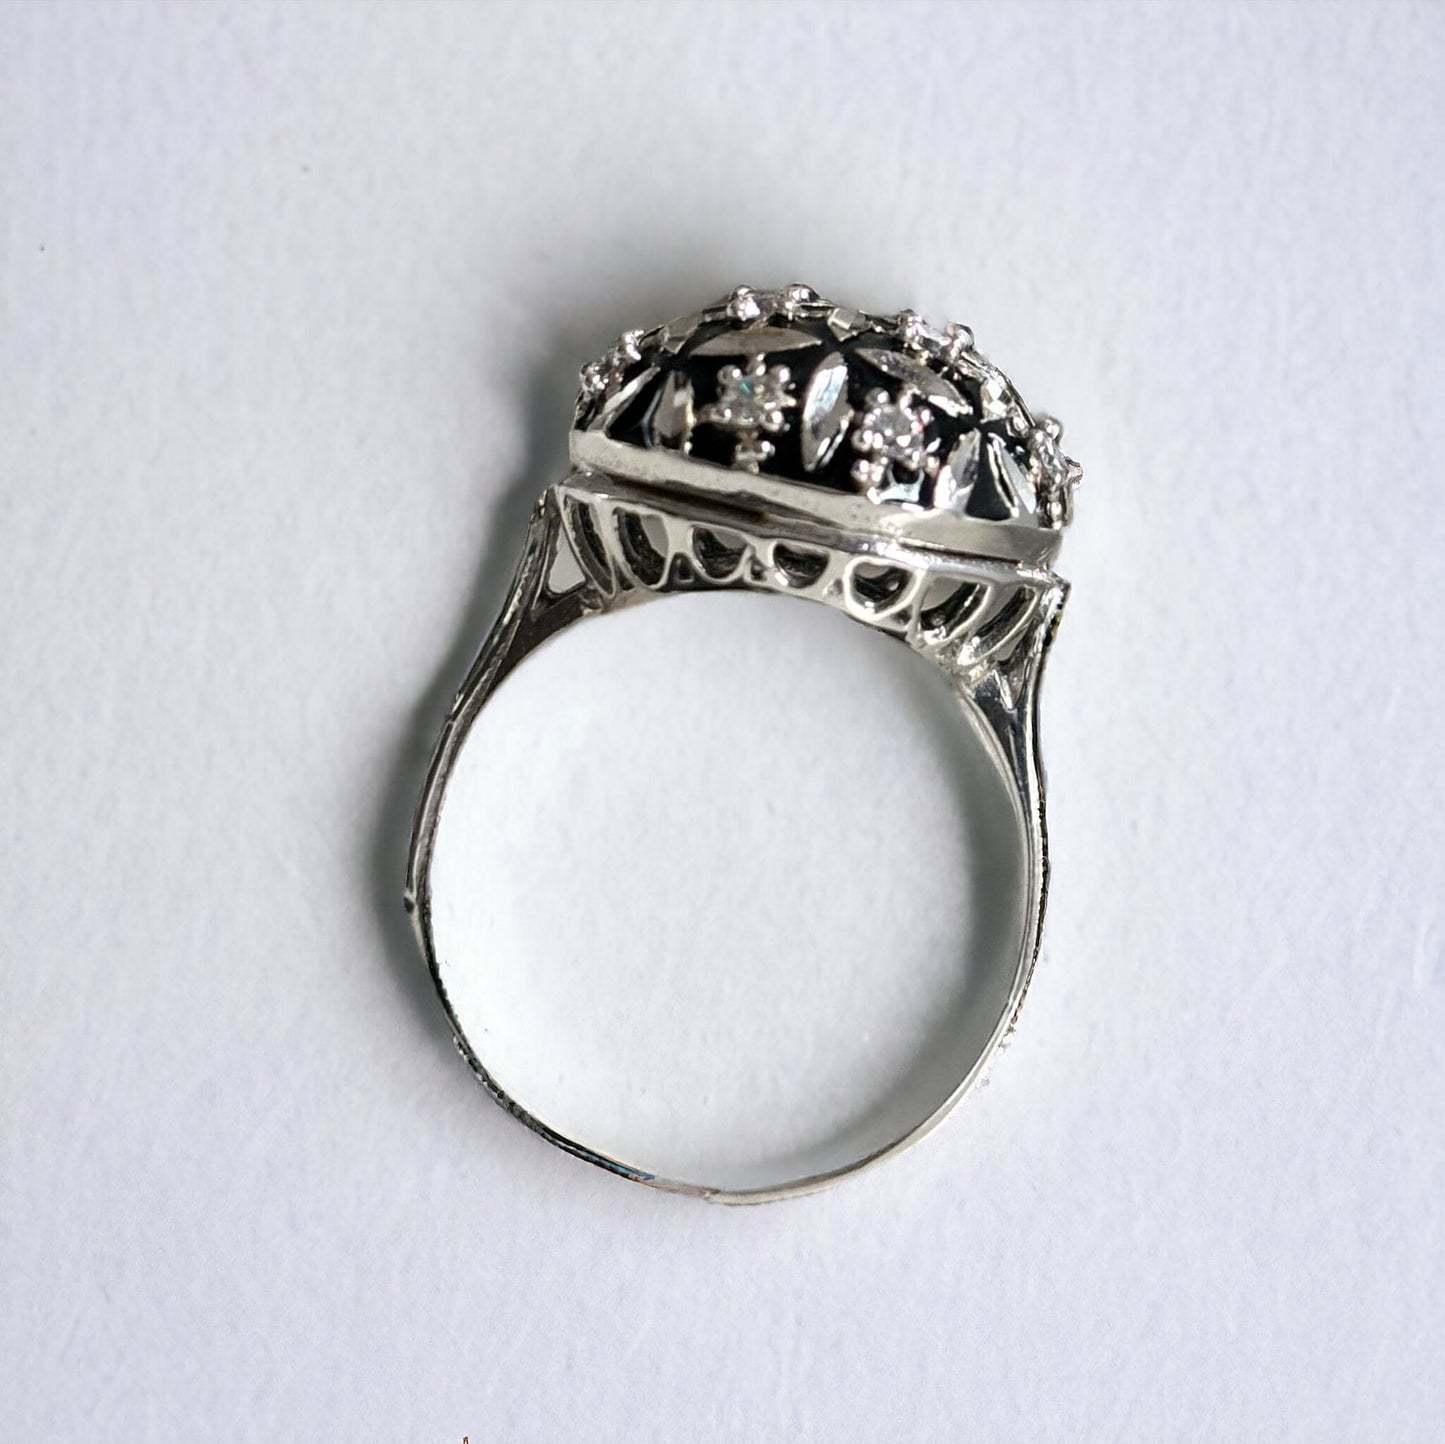 18k White Gold Black Enamel and Zirconium Ring - émail Noir Zircone Ring, UNGARI profile from the top on white background